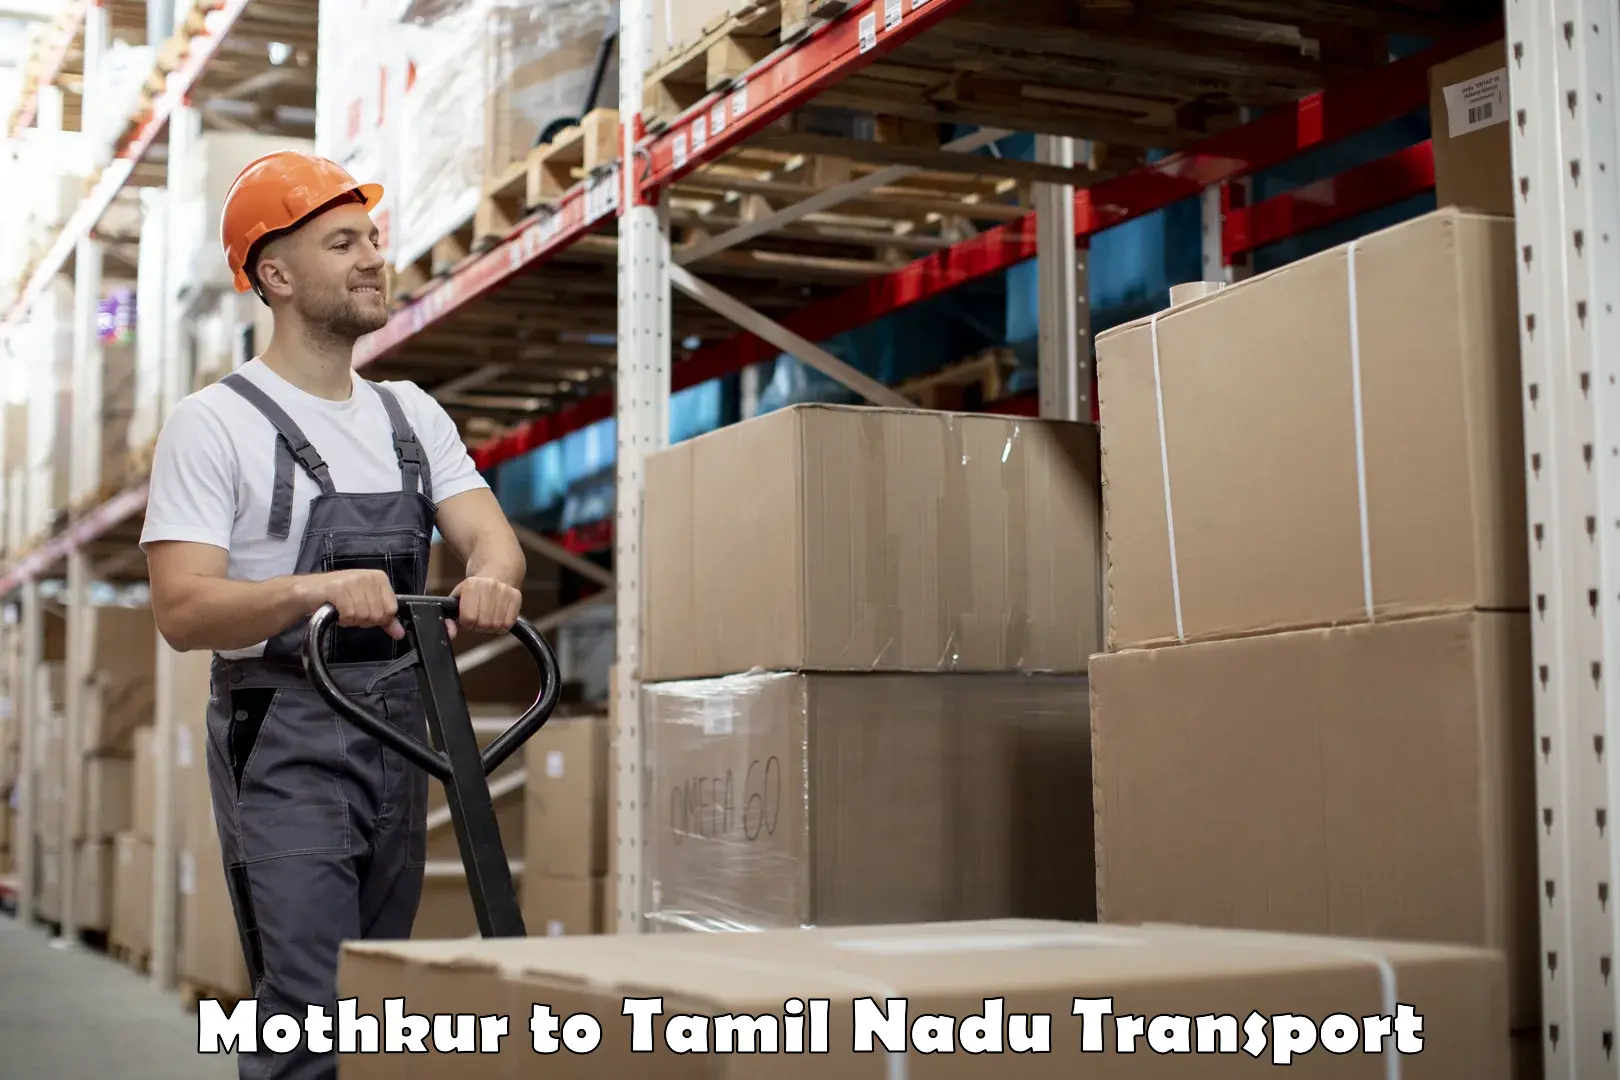 Bike transport service Mothkur to Tamil Nadu